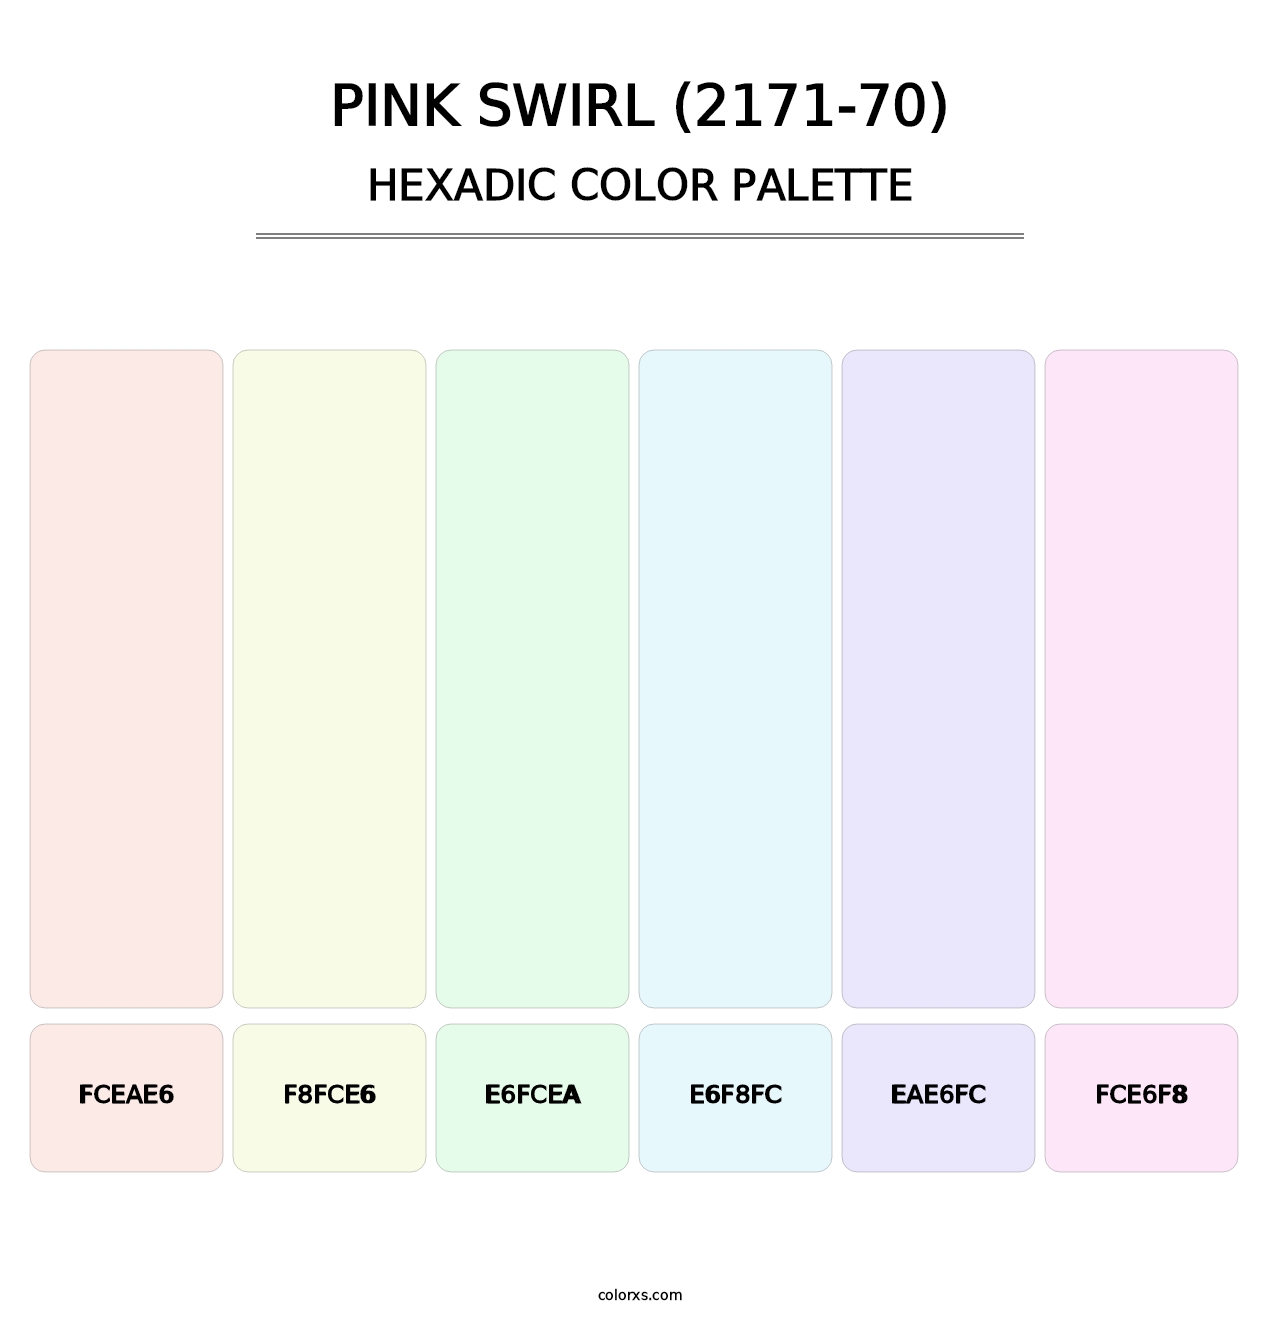 Pink Swirl (2171-70) - Hexadic Color Palette